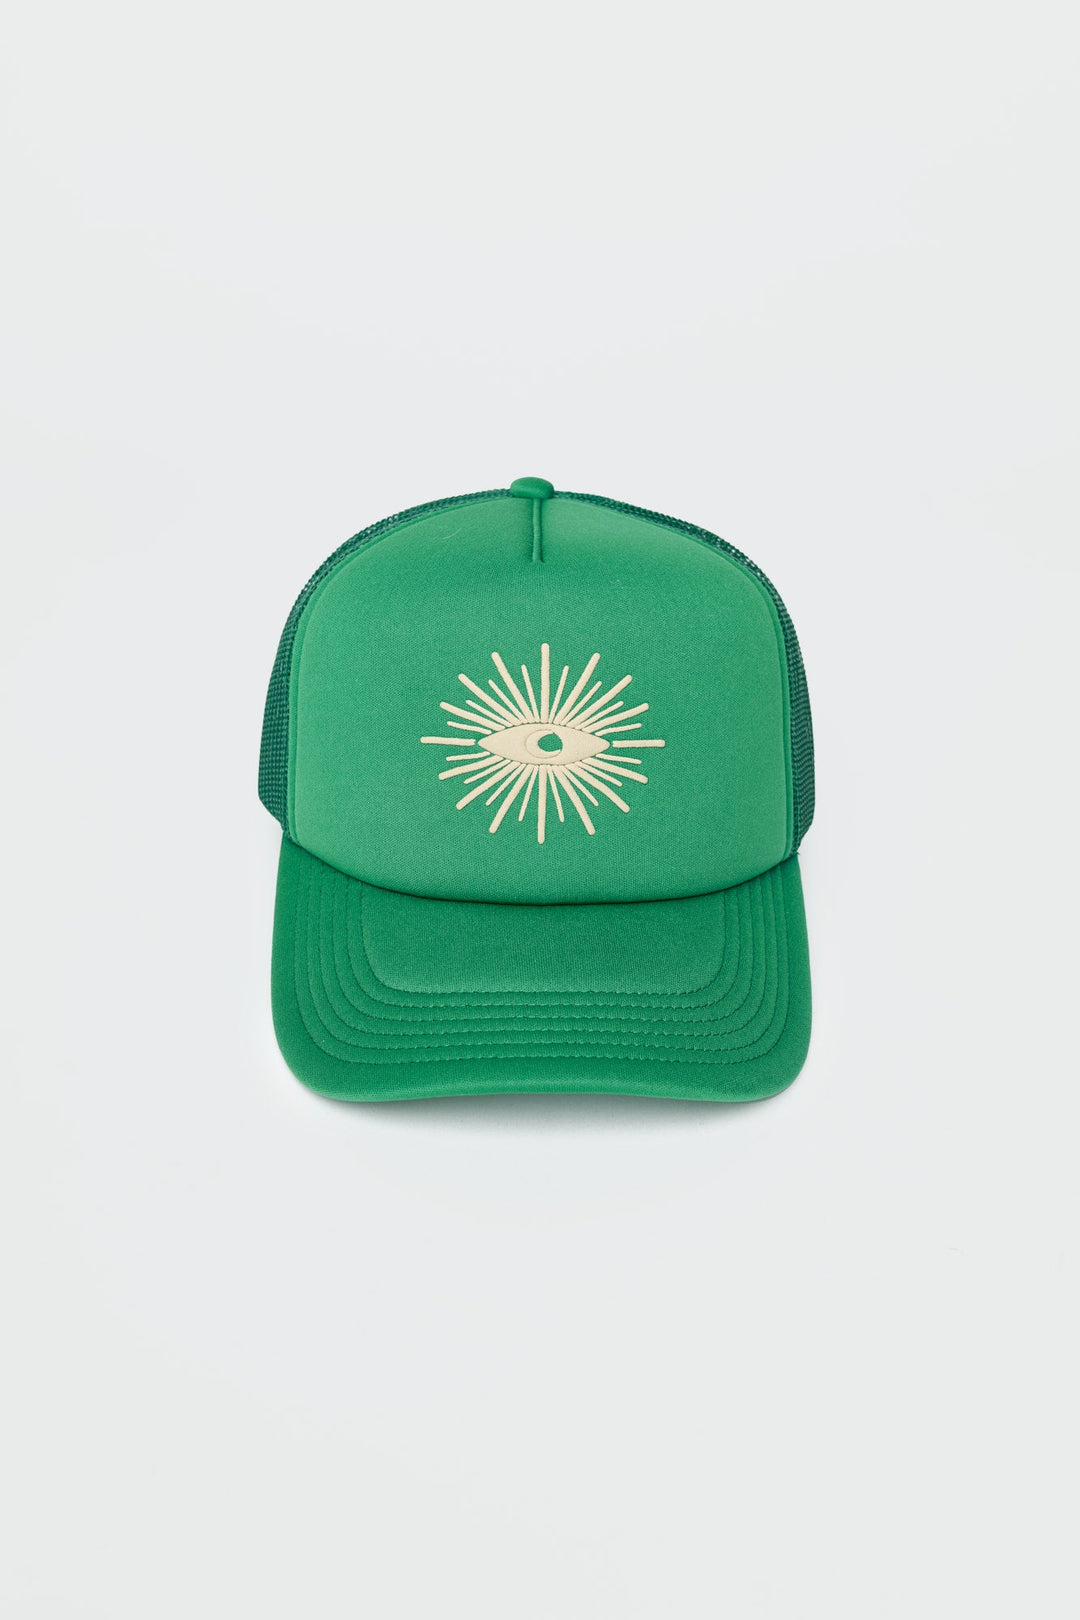 Spiritual Gangster Seeing Eye Trucker Hat - Green - Sun Diego Boardshop